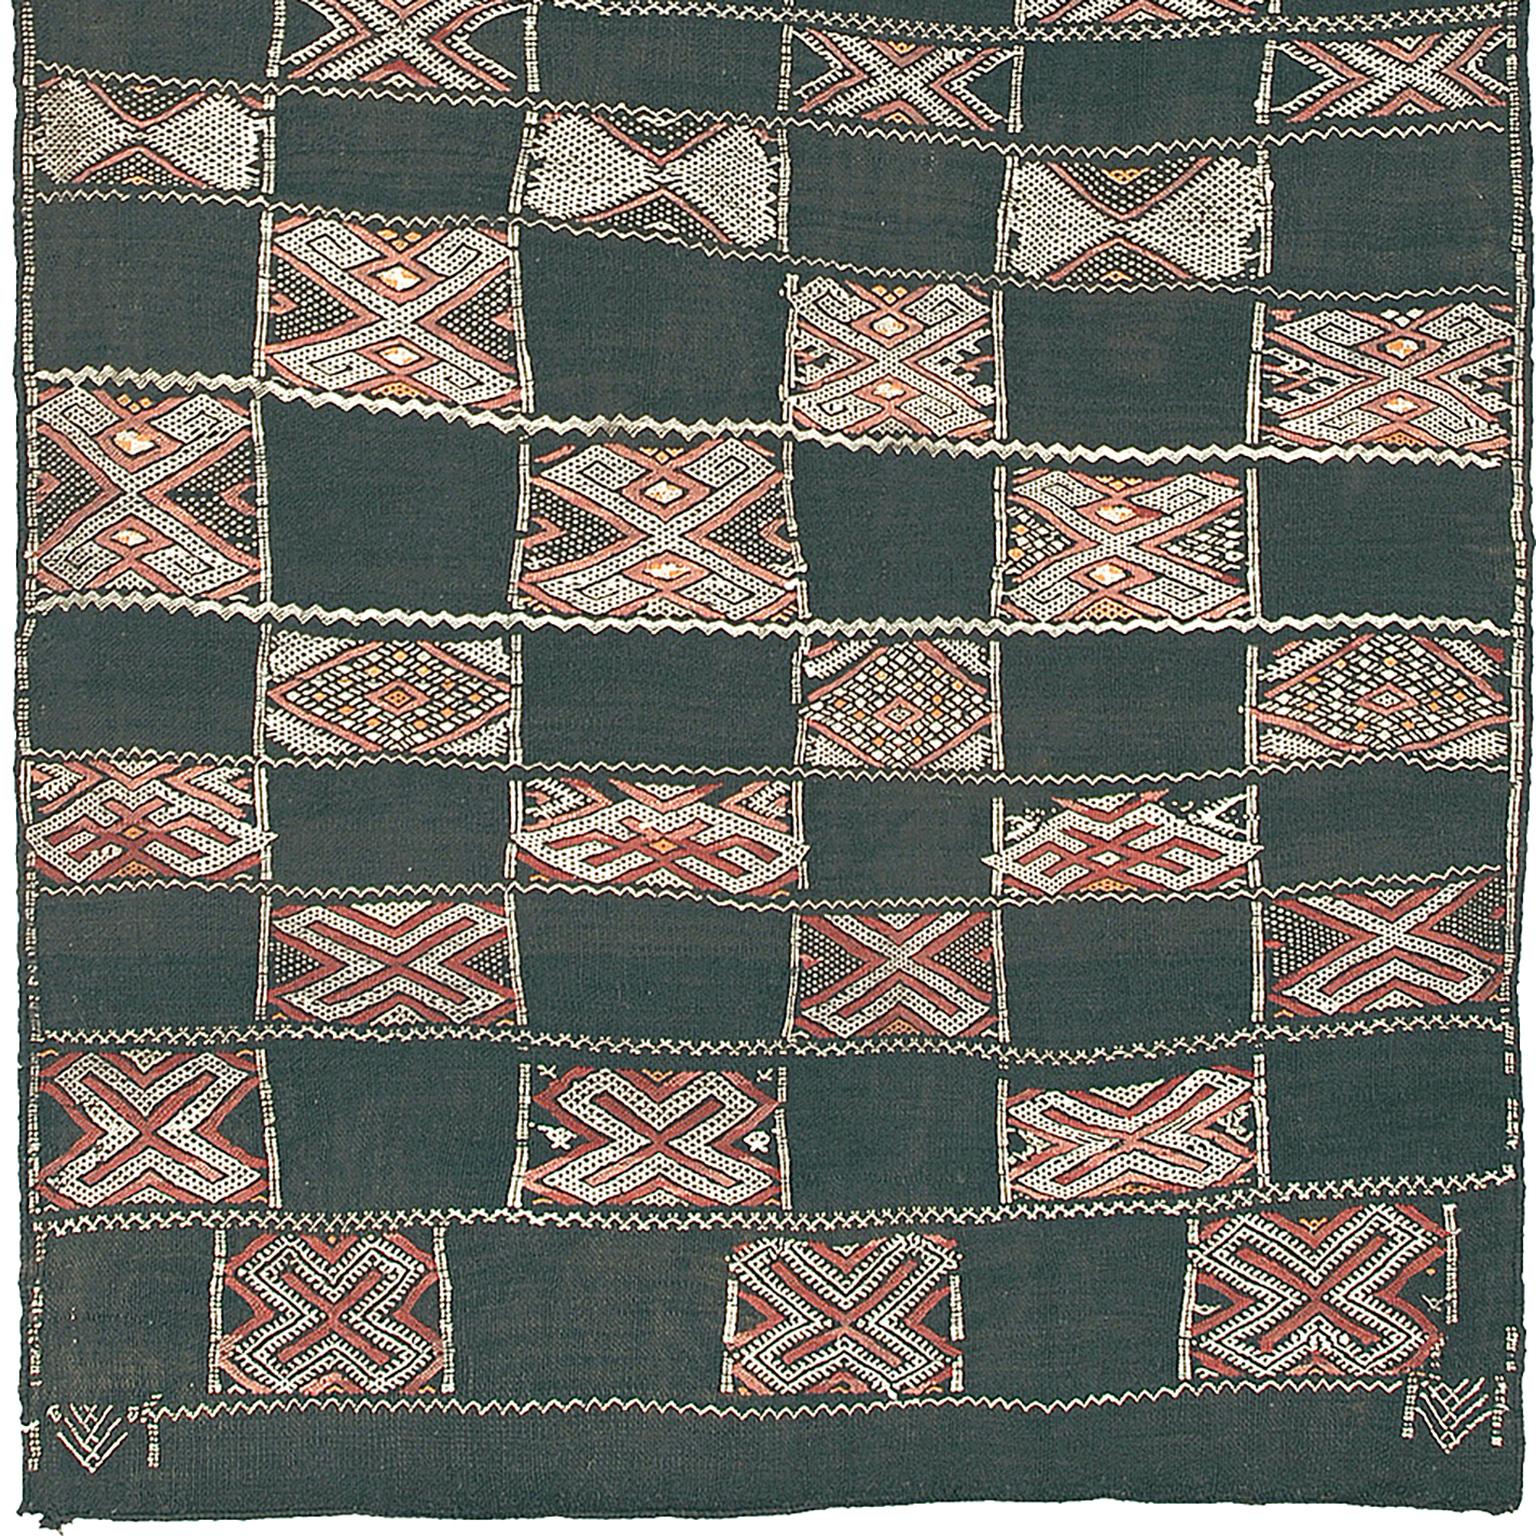 Mid-20th century Moroccan Zaiane carpet
Morocco, circa 1940
Handwoven.